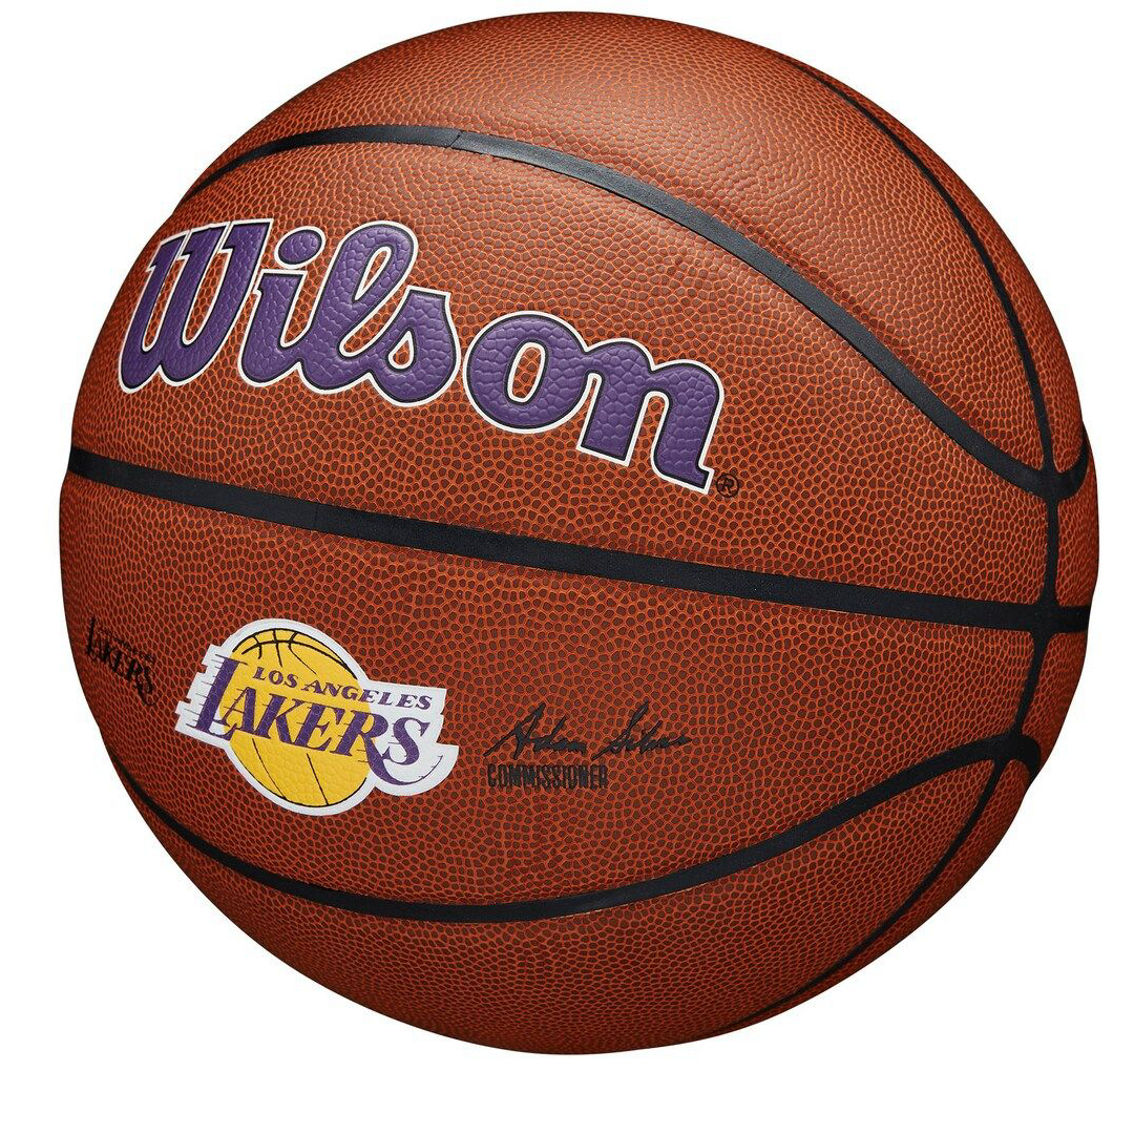 Wilson Los Angeles Lakers Wilson NBA Team Alliance Basketball - Image 4 of 4